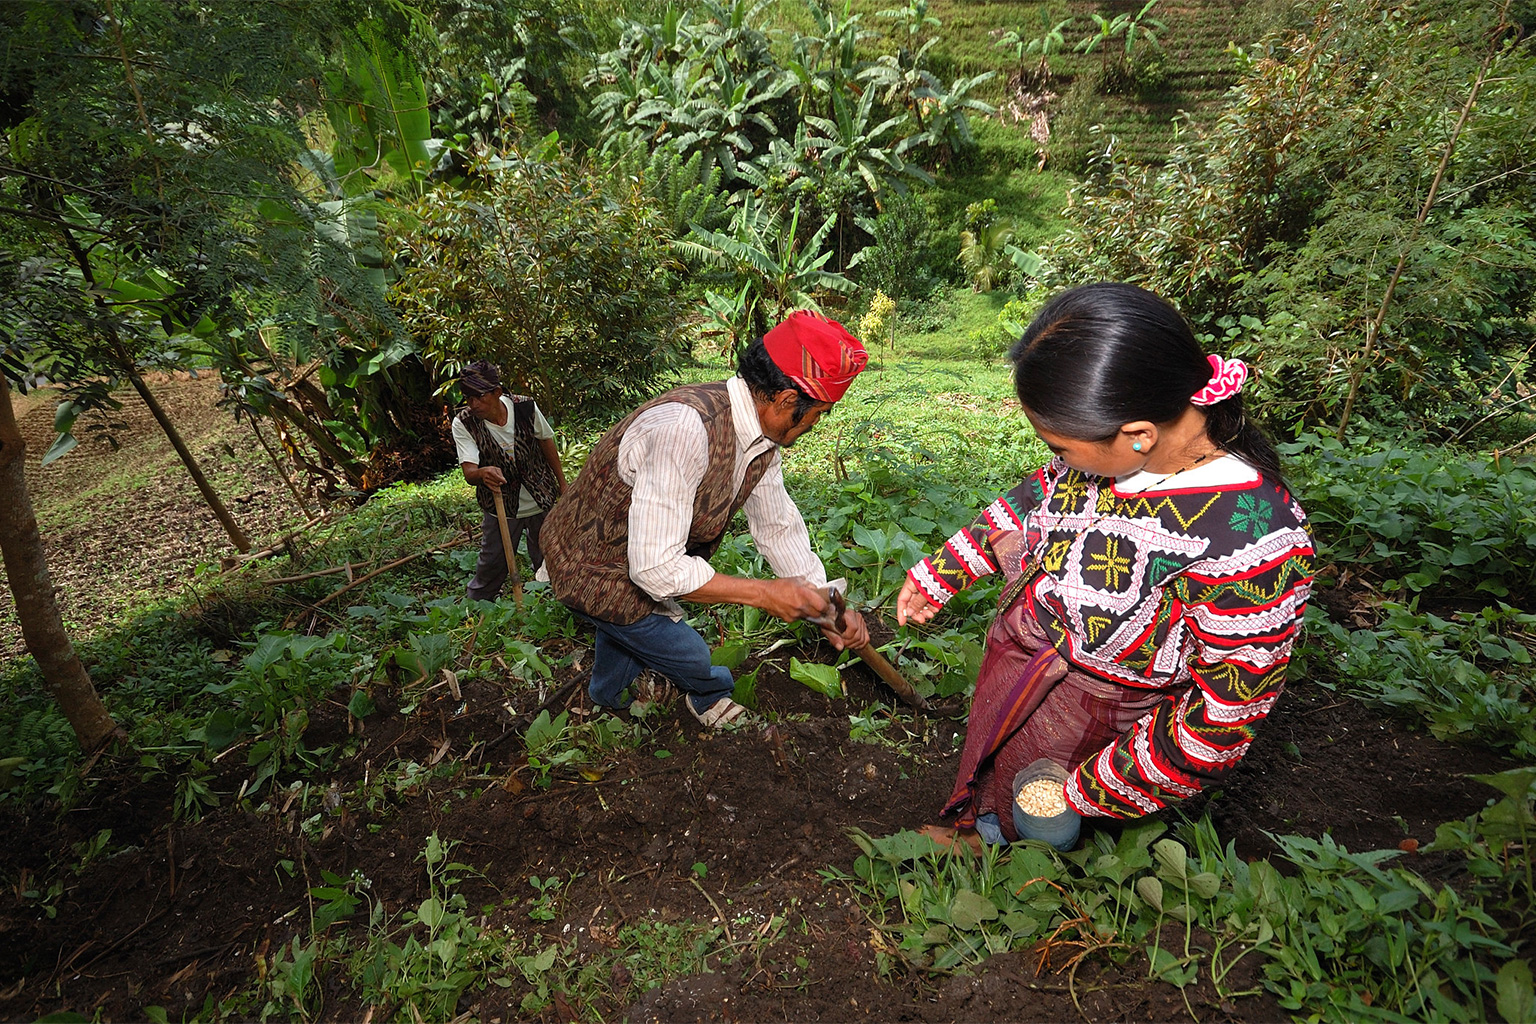 Indigenous people near Lake Sebu planting crops.